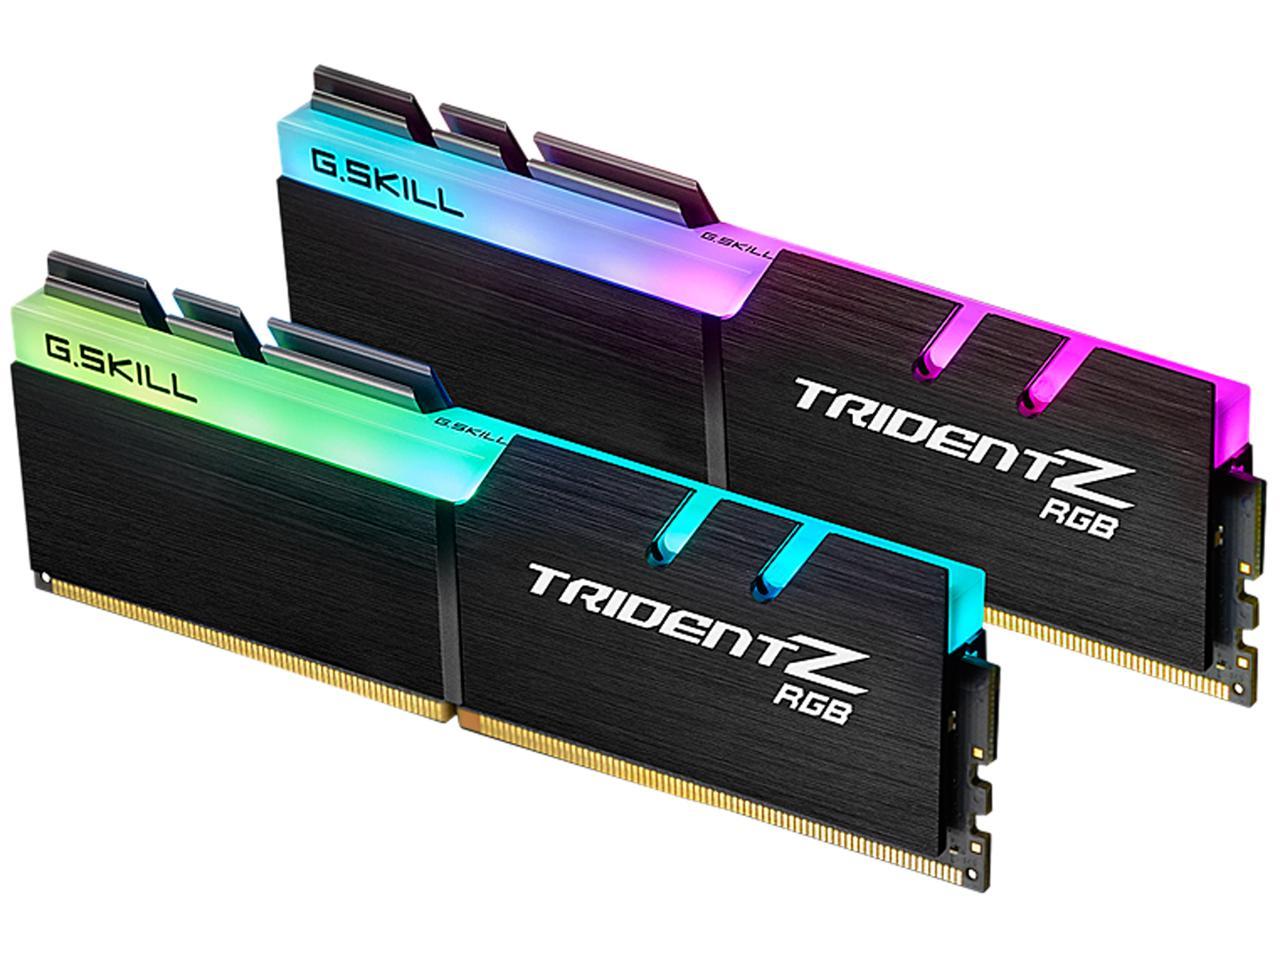 G.SKILL TridentZ RGB Series 16GB (2 x 8GB) DDR4 3200 (PC4 25600 